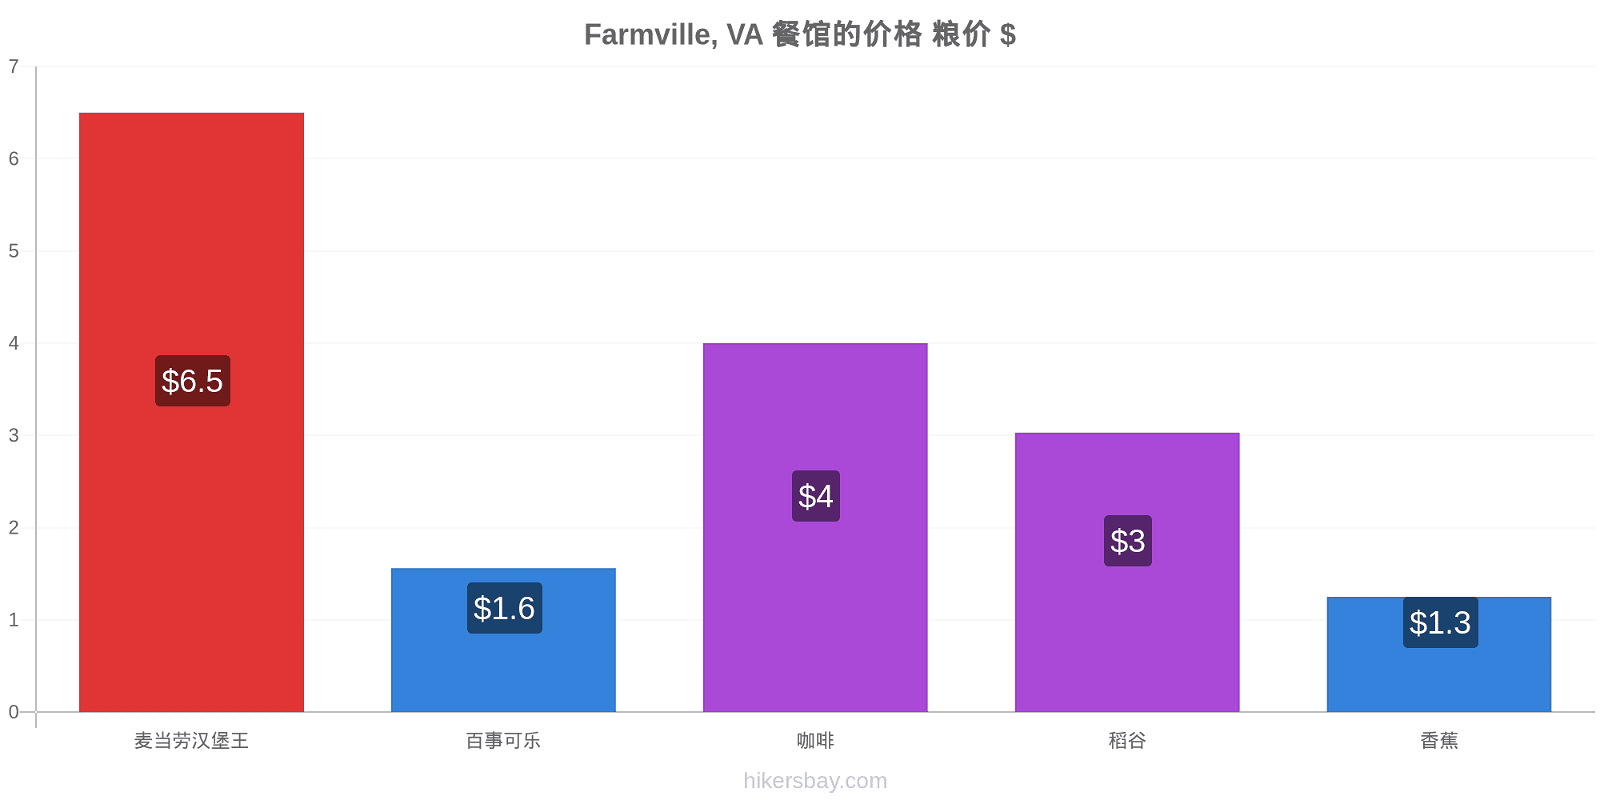 Farmville, VA 价格变动 hikersbay.com